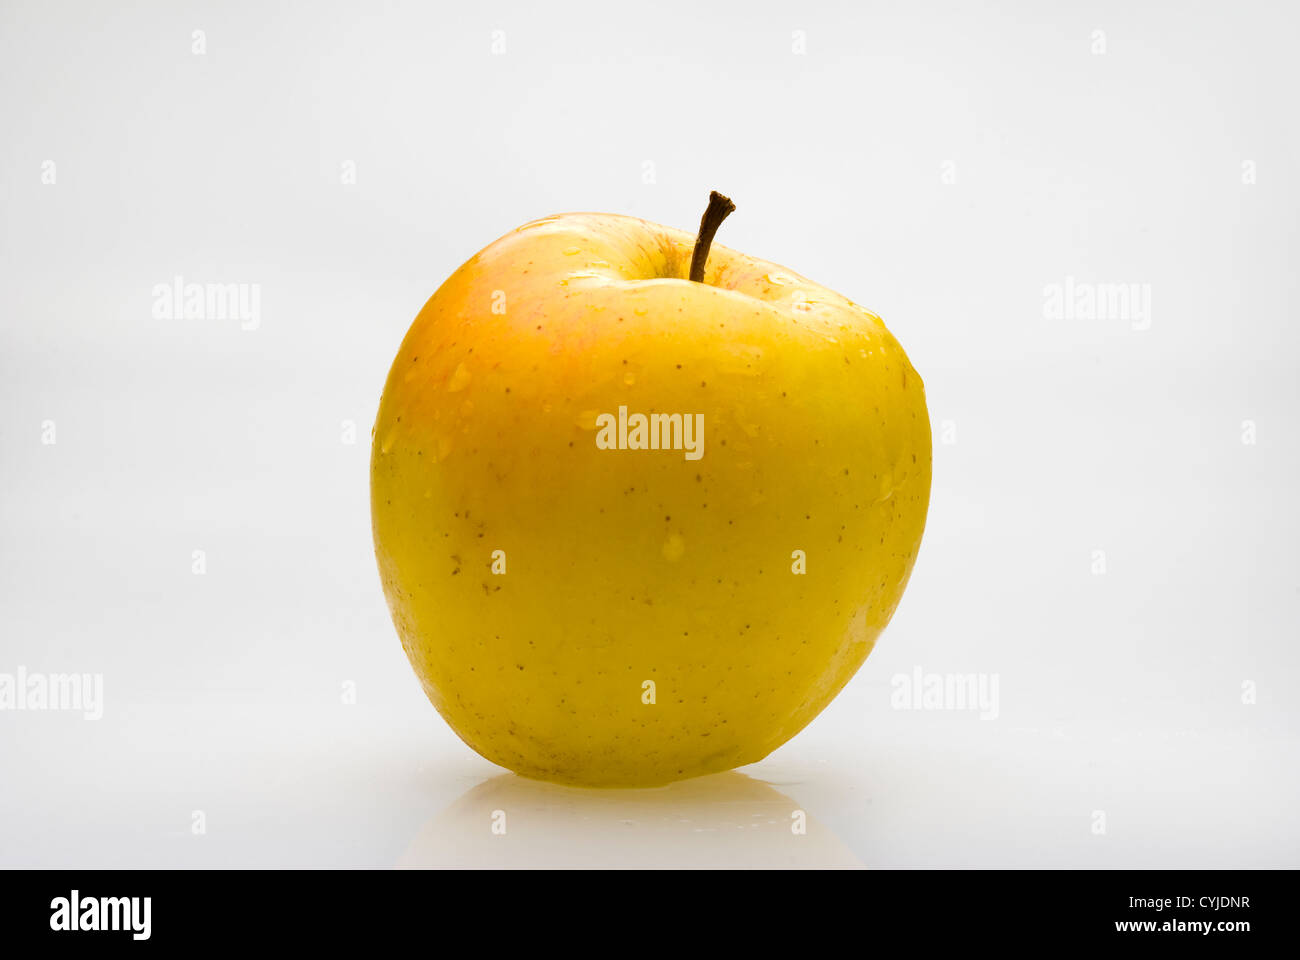 Manzana amarilla fresca con injerto waterdrops sobre fondo blanco. Foto de stock